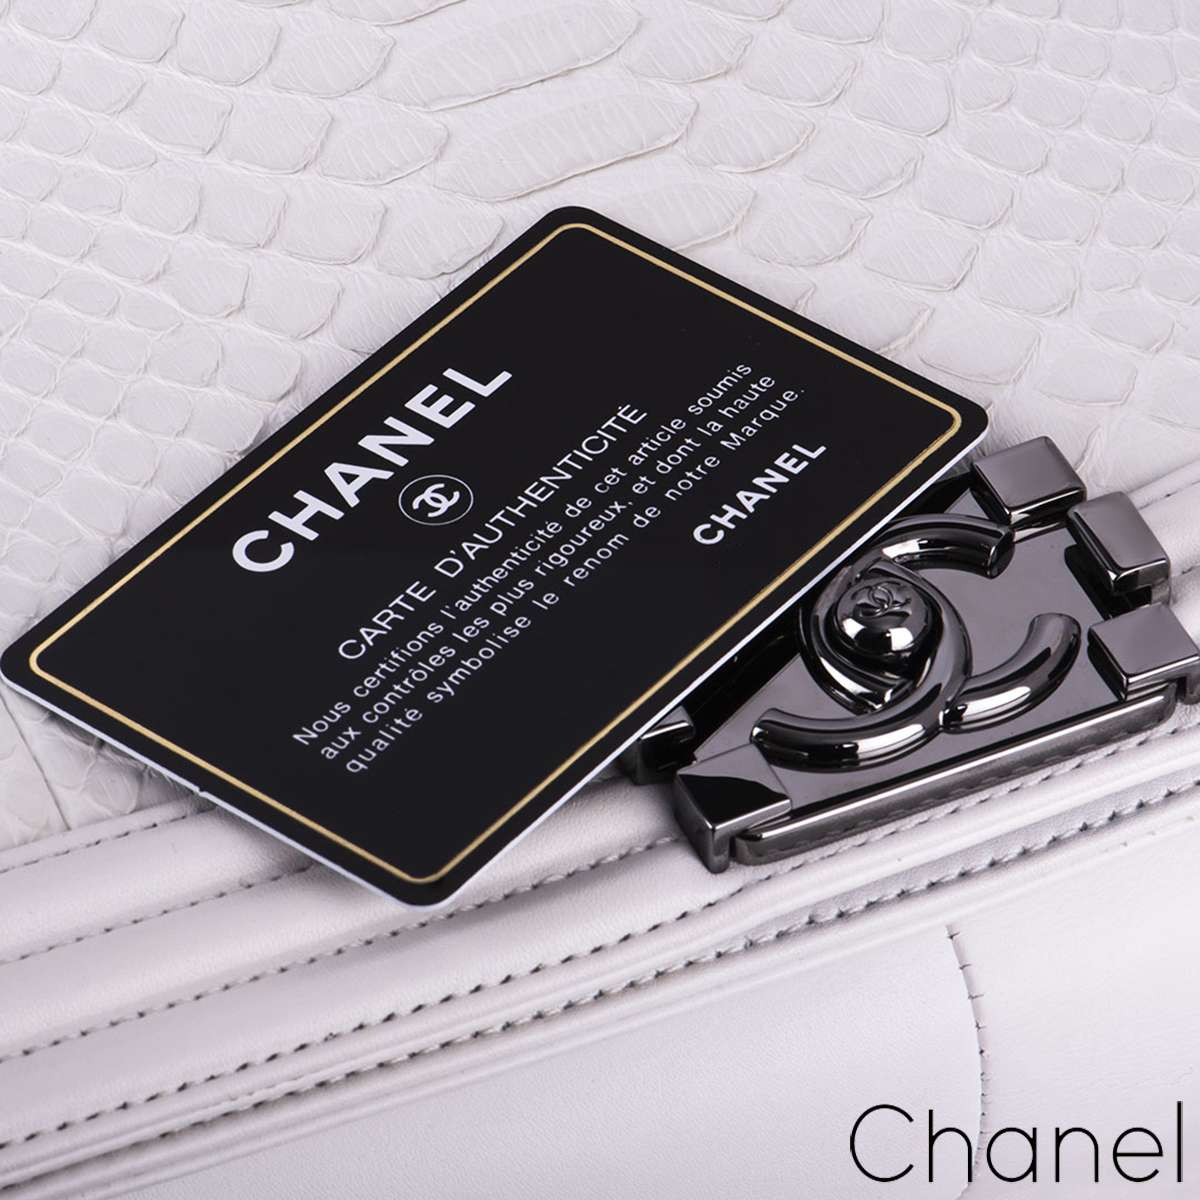 Chanel White Python Large Boy Bag